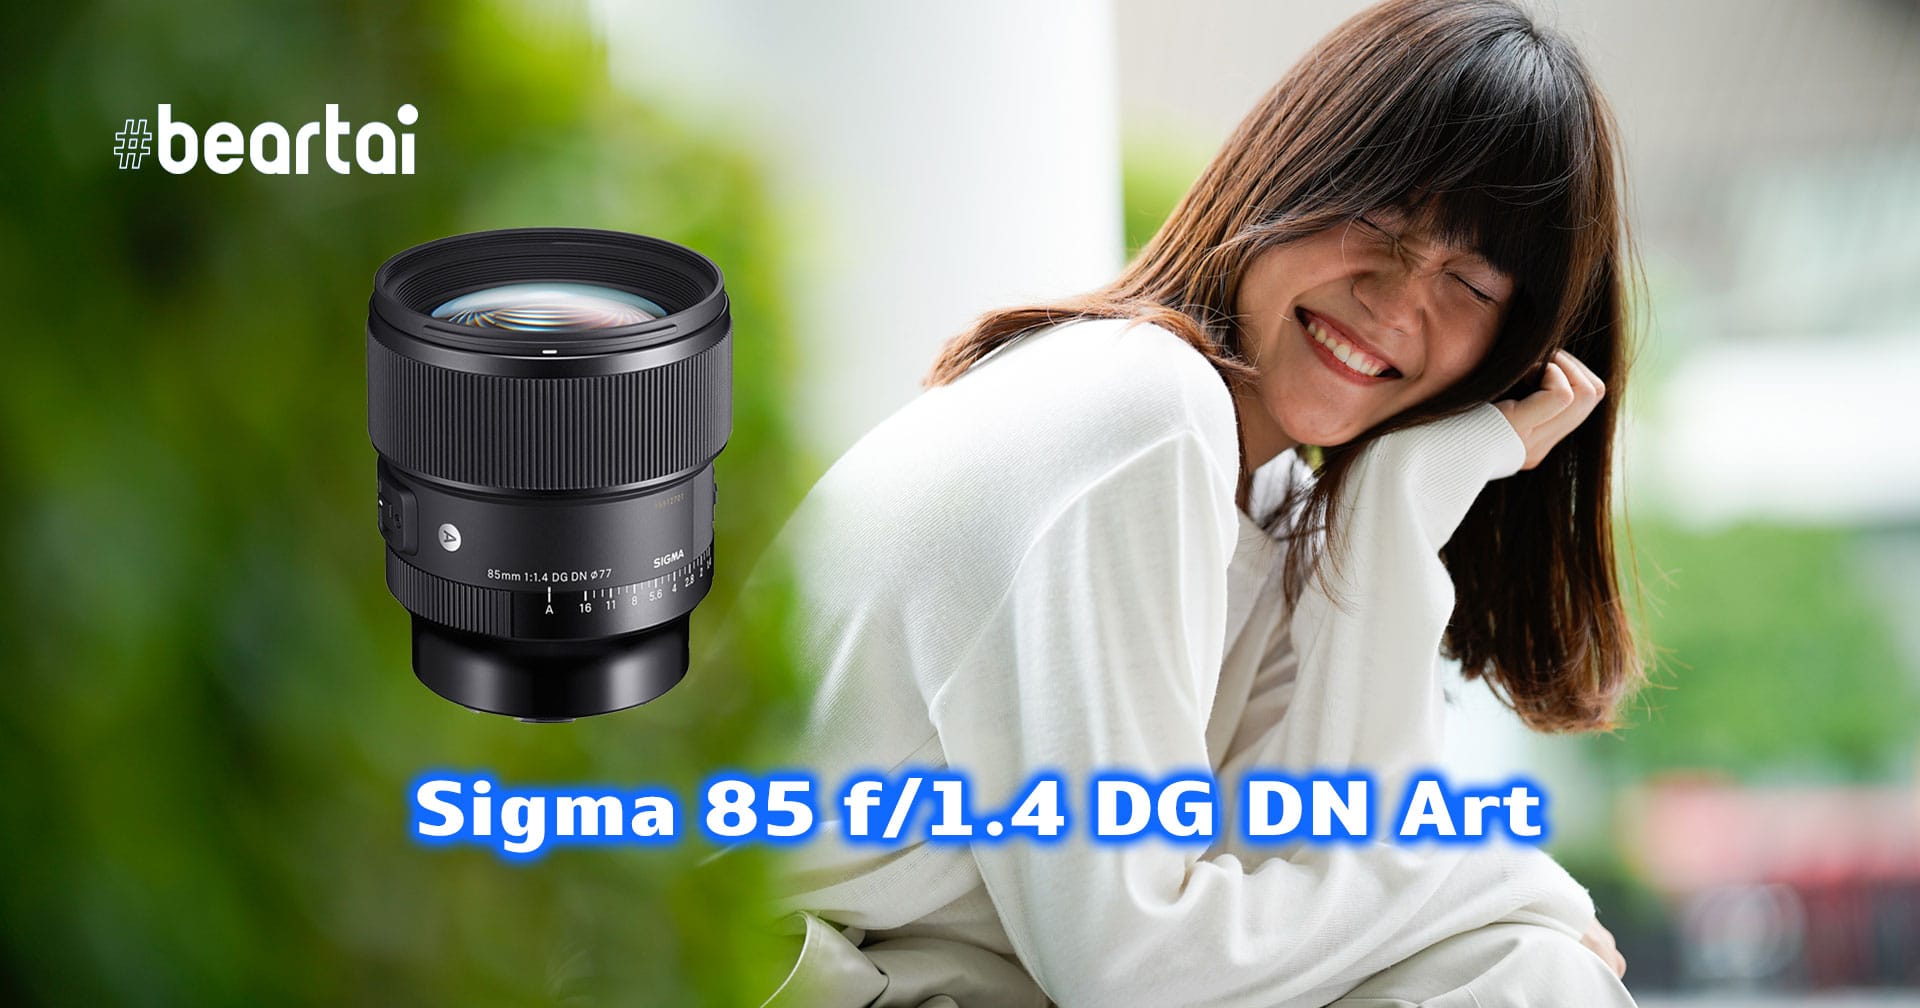 Preview เลนส์สายน้า Sigma 85 f/1.4 DG DN Art ในขนาดตัวที่เล็กลงแต่คุณภาพไม่เล็กตาม!